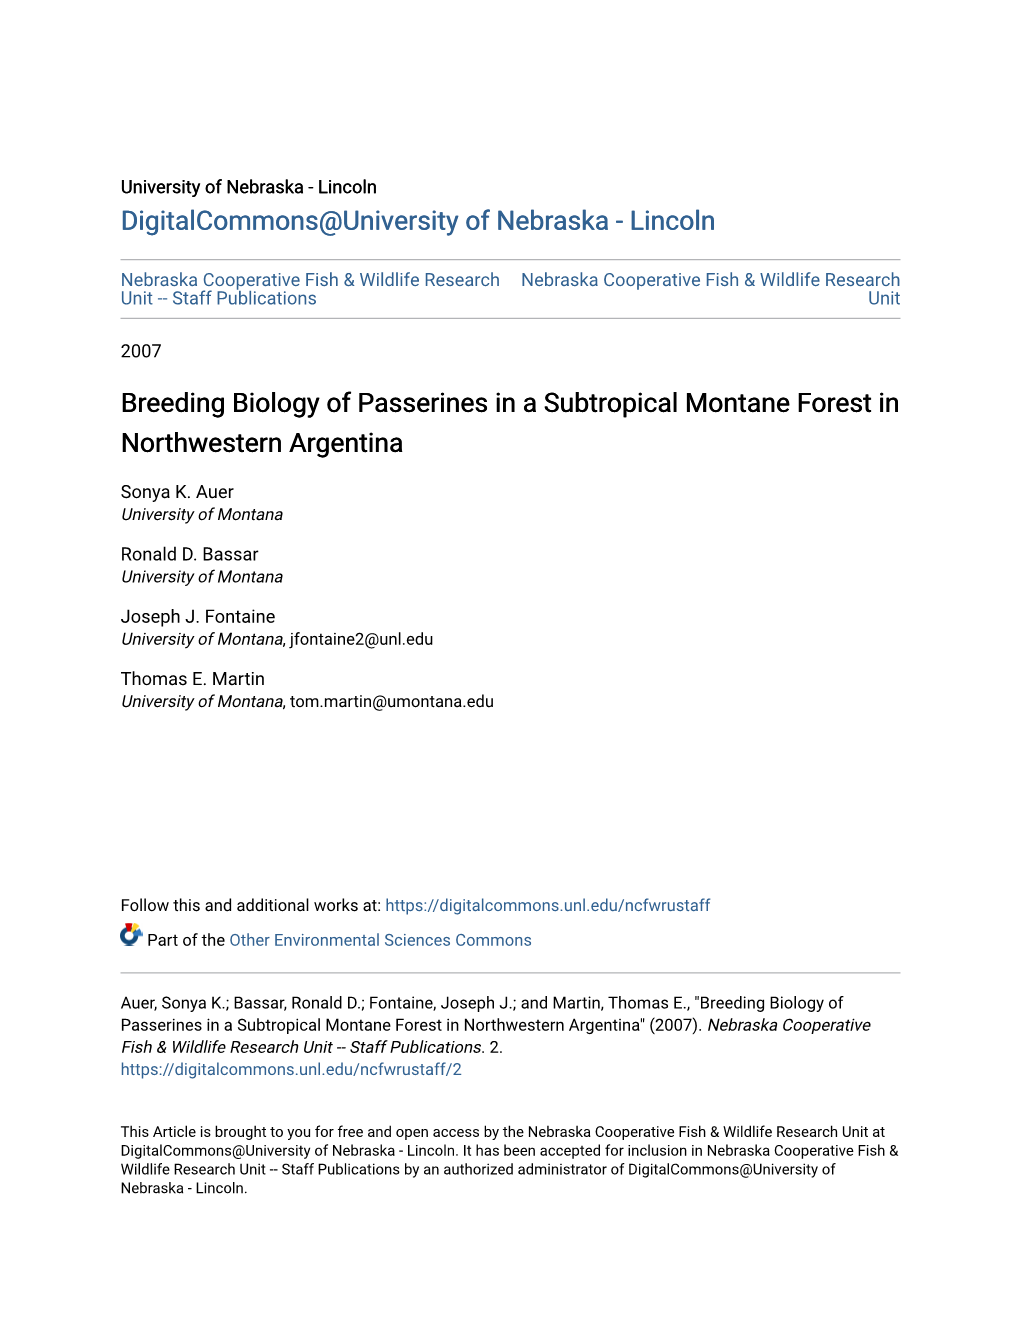 Breeding Biology of Passerines in a Subtropical Montane Forest in Northwestern Argentina